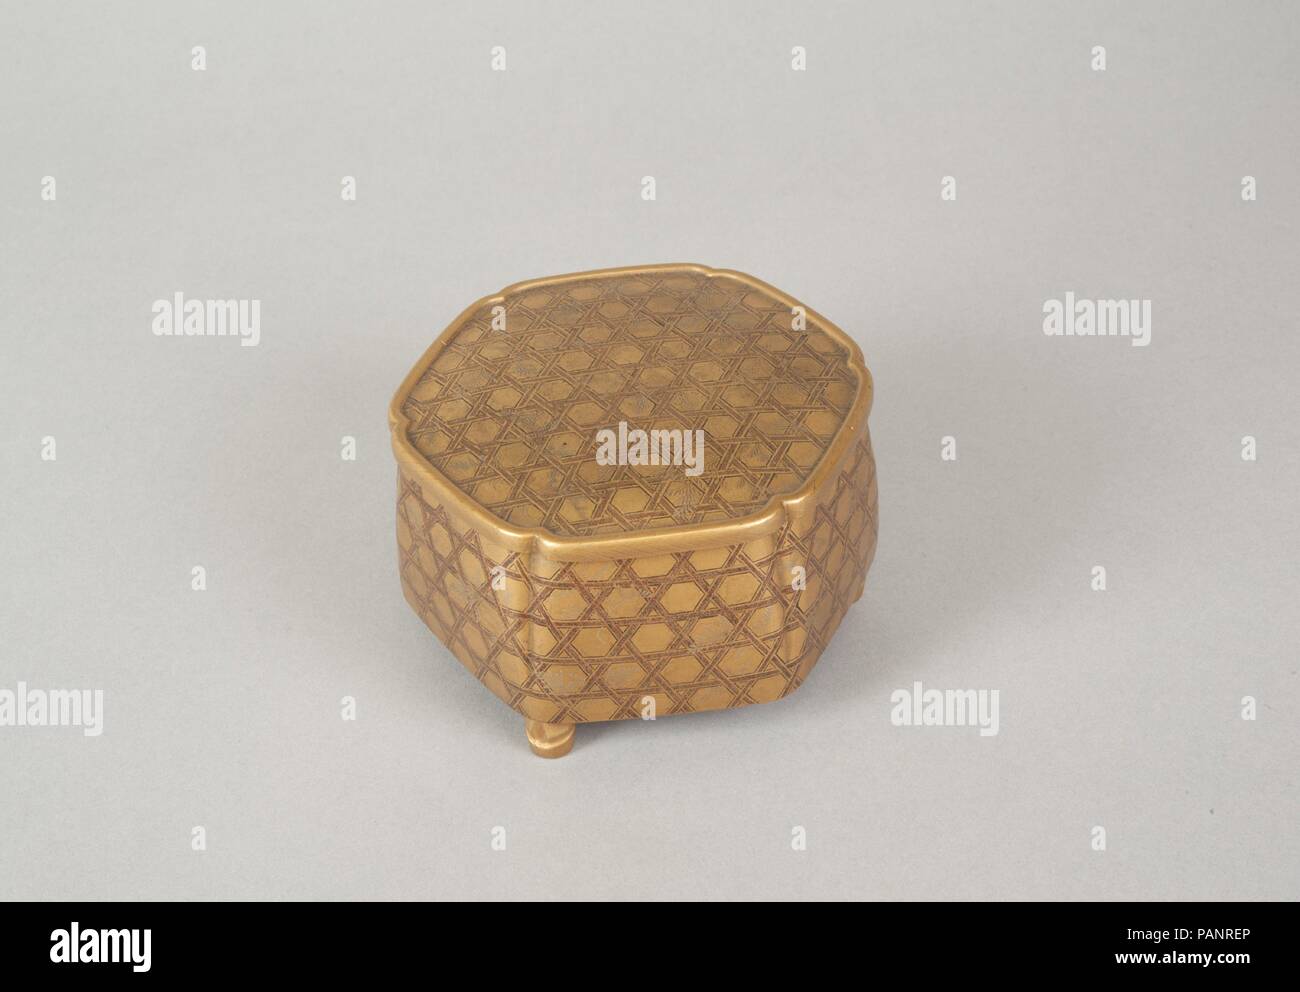 Cosmetic Box. Culture: Japan. Dimensions: H. 2 3/8 in. (6 cm); W. 3 3/4 in. (9.5 cm). Date: late 19th century. Museum: Metropolitan Museum of Art, New York, USA. Stock Photo